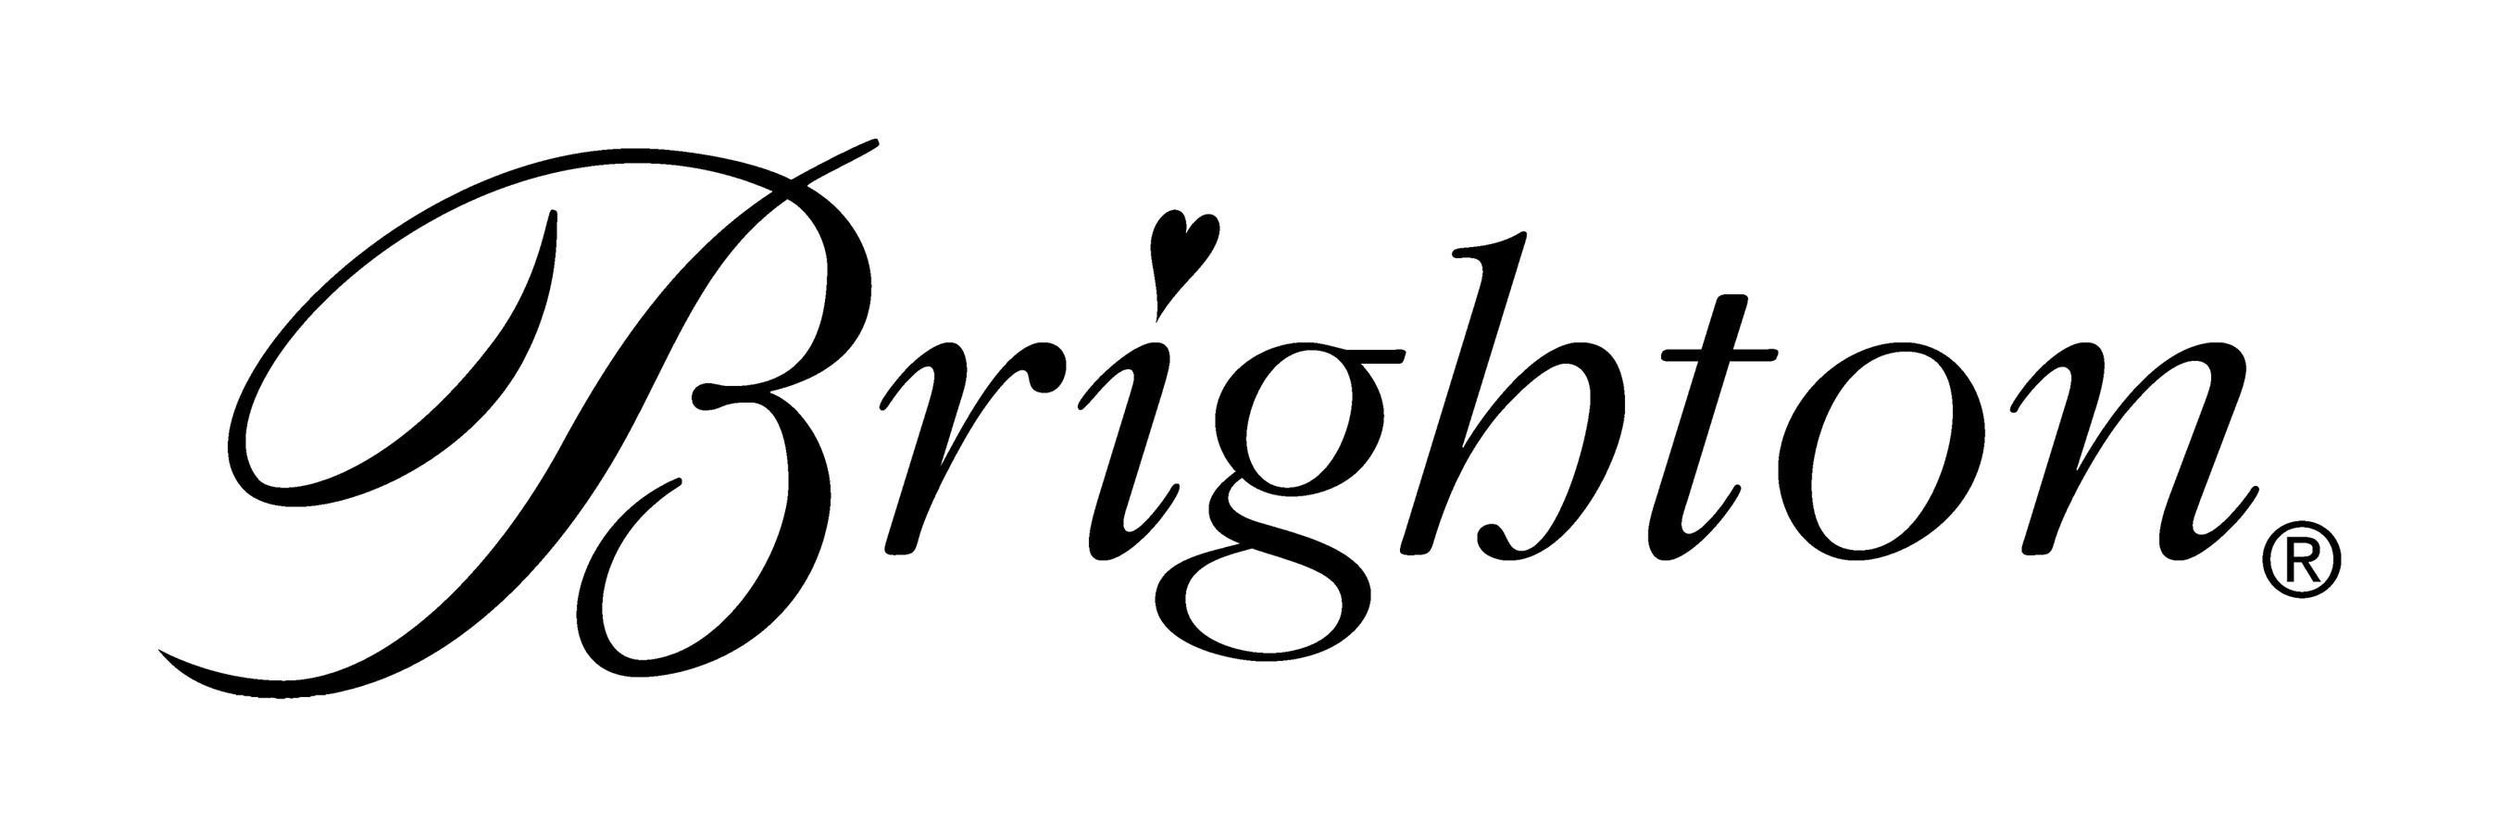 Brighton logo.jpeg